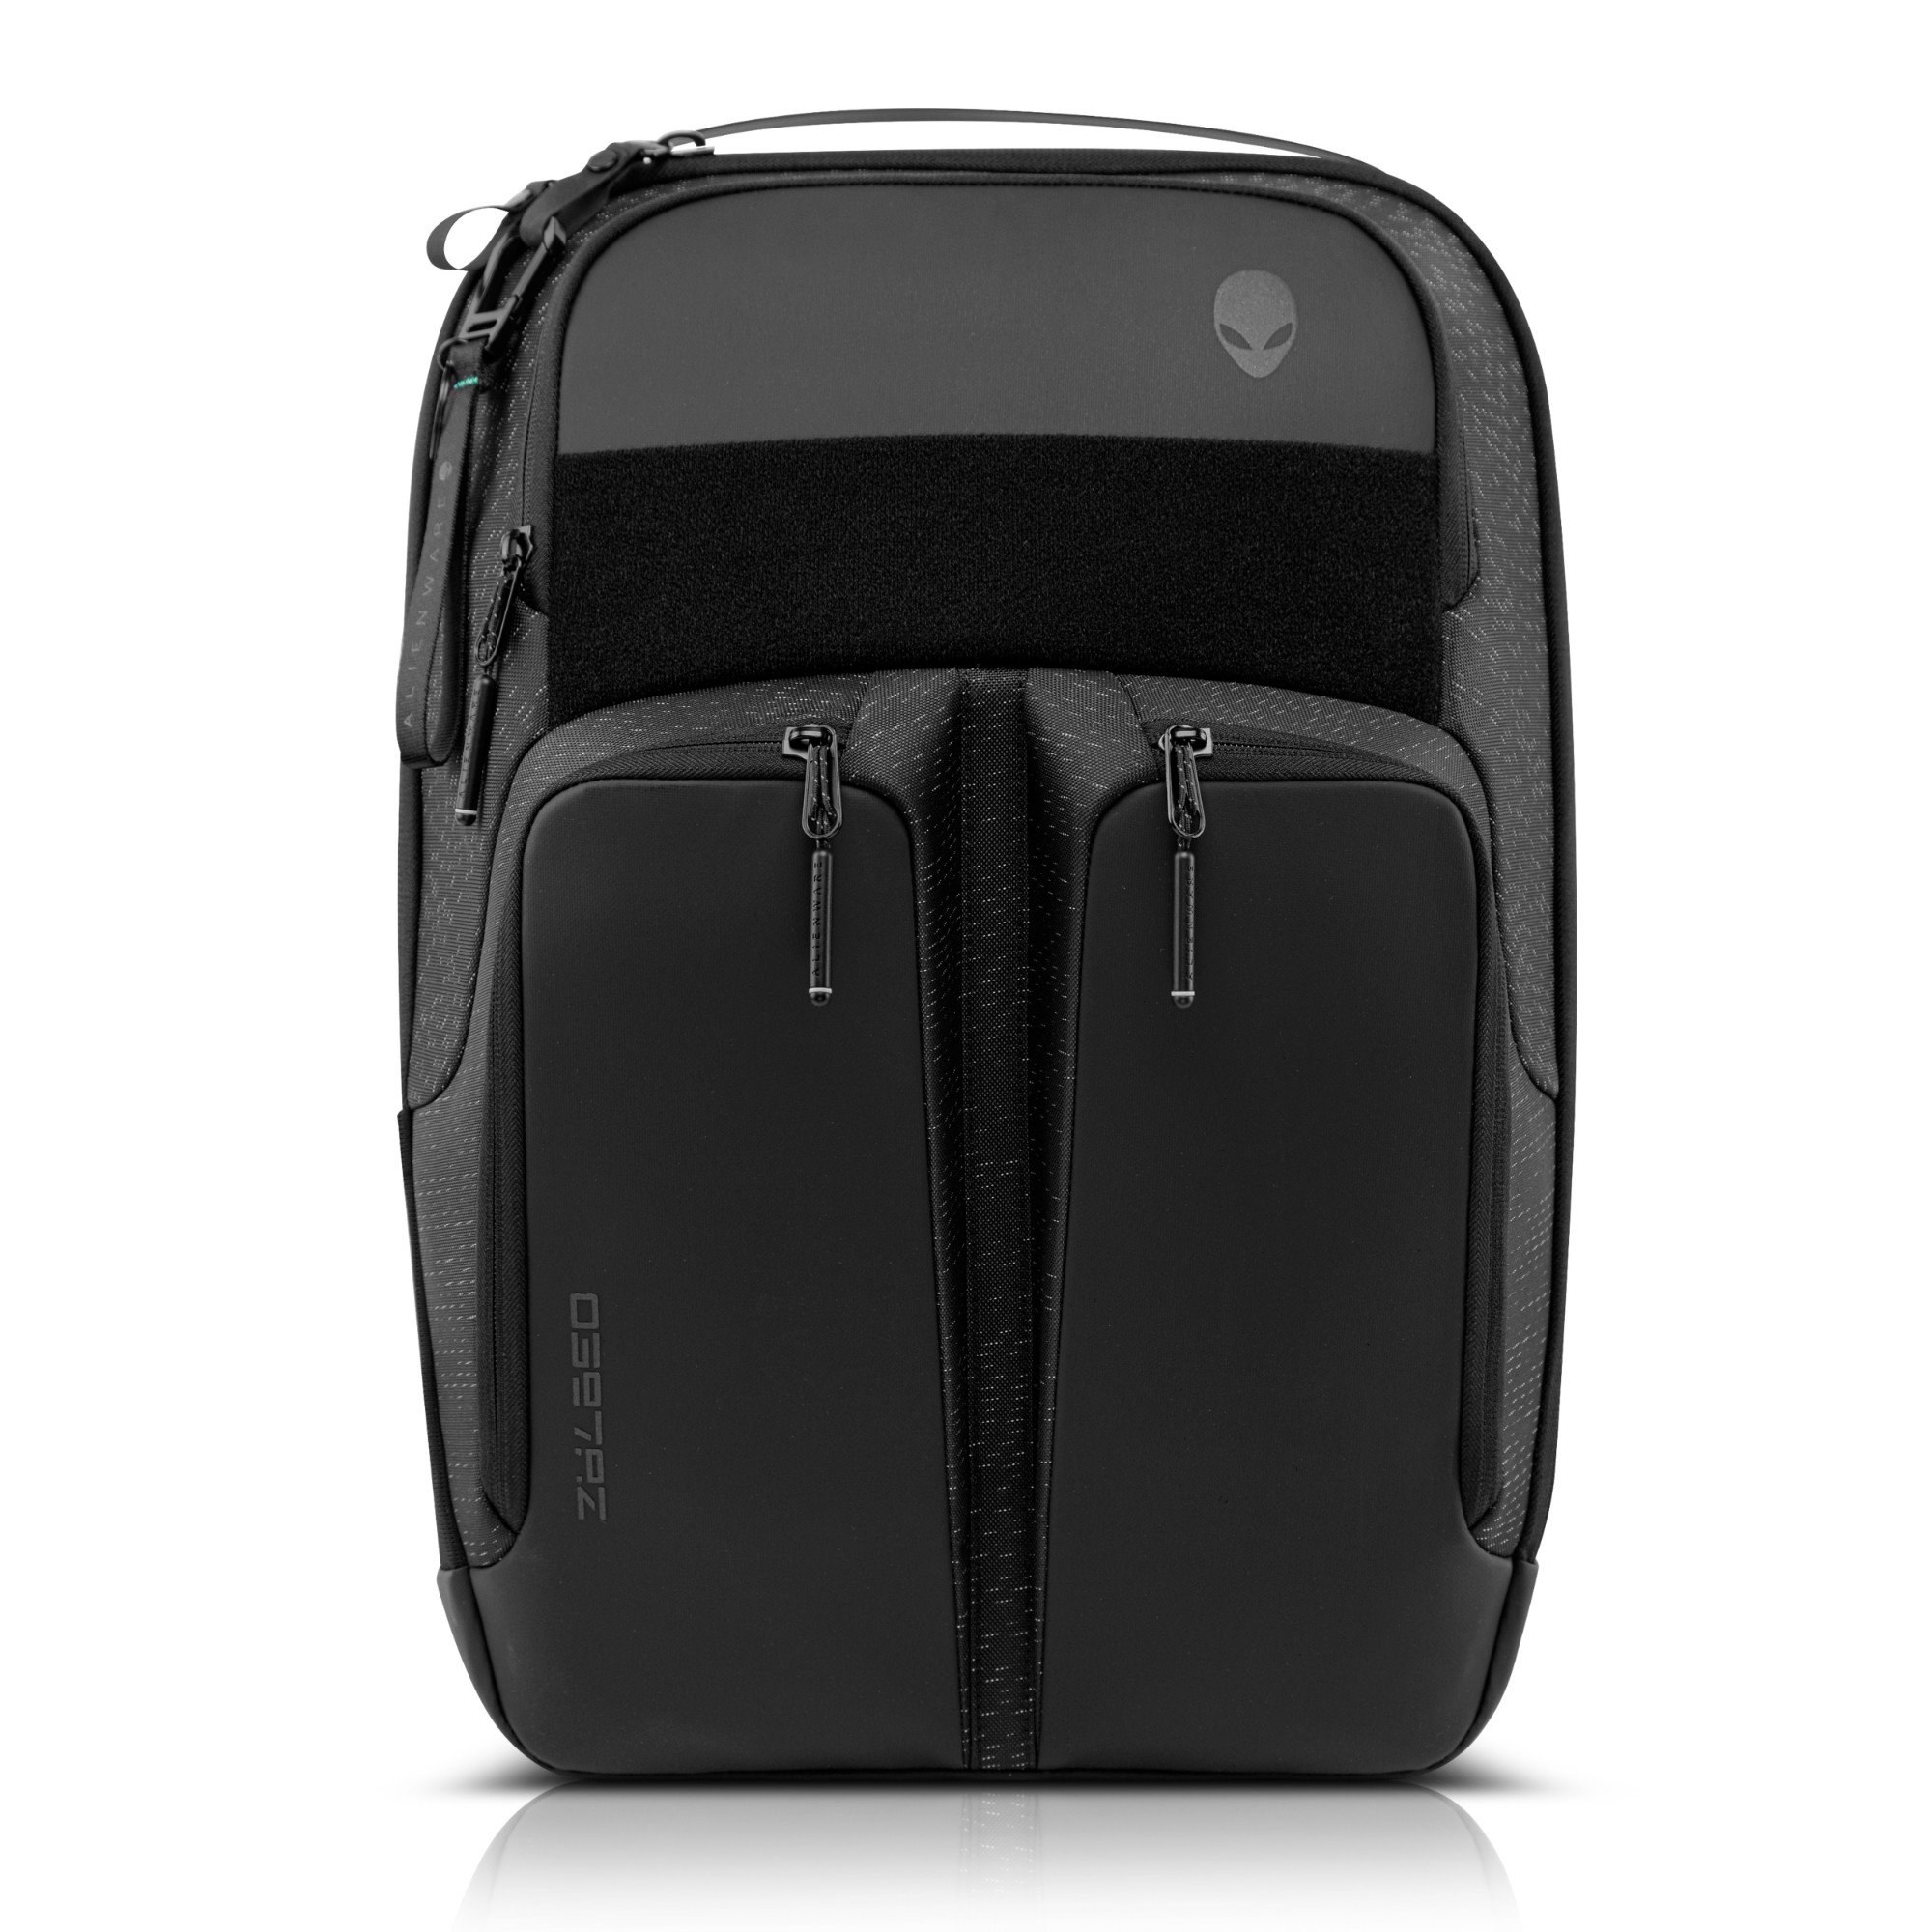 Alienware AW523P backpack Casual backpack Black EVA (Ethylene Vinyl Acetate)